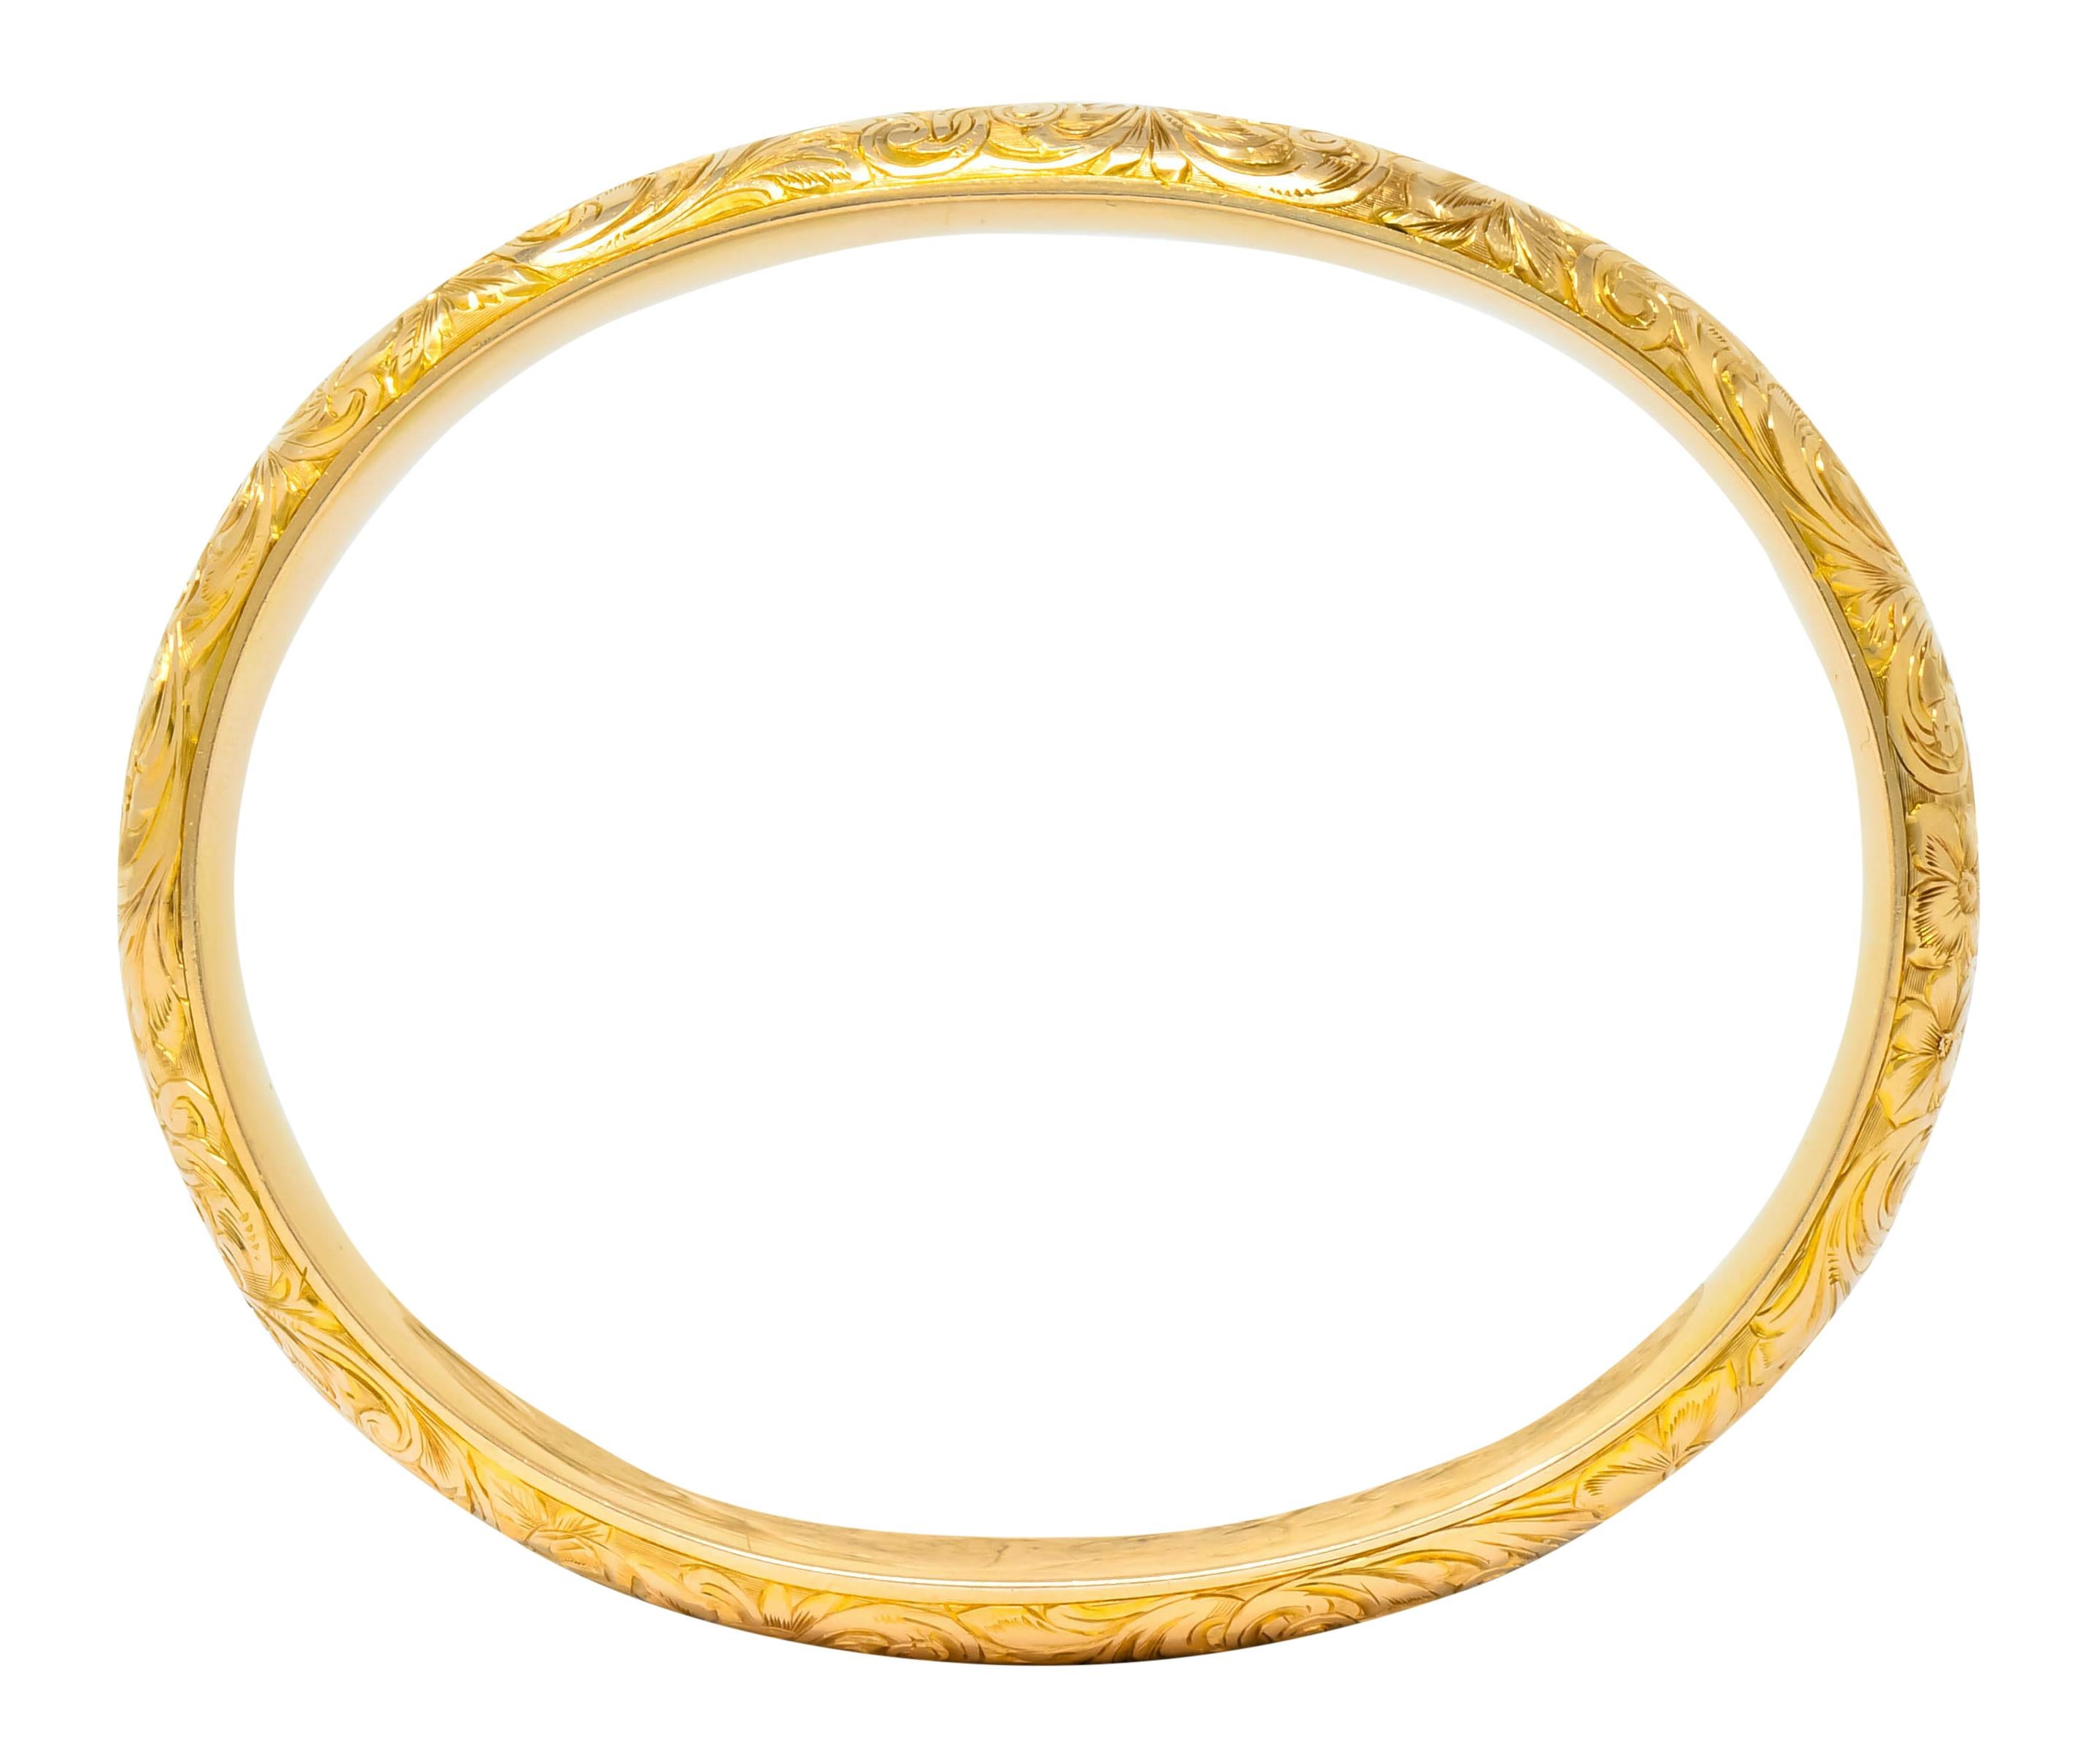 Riker Brothers Art Nouveau 14 Karat Gold Floral Bangle Bracelet 1